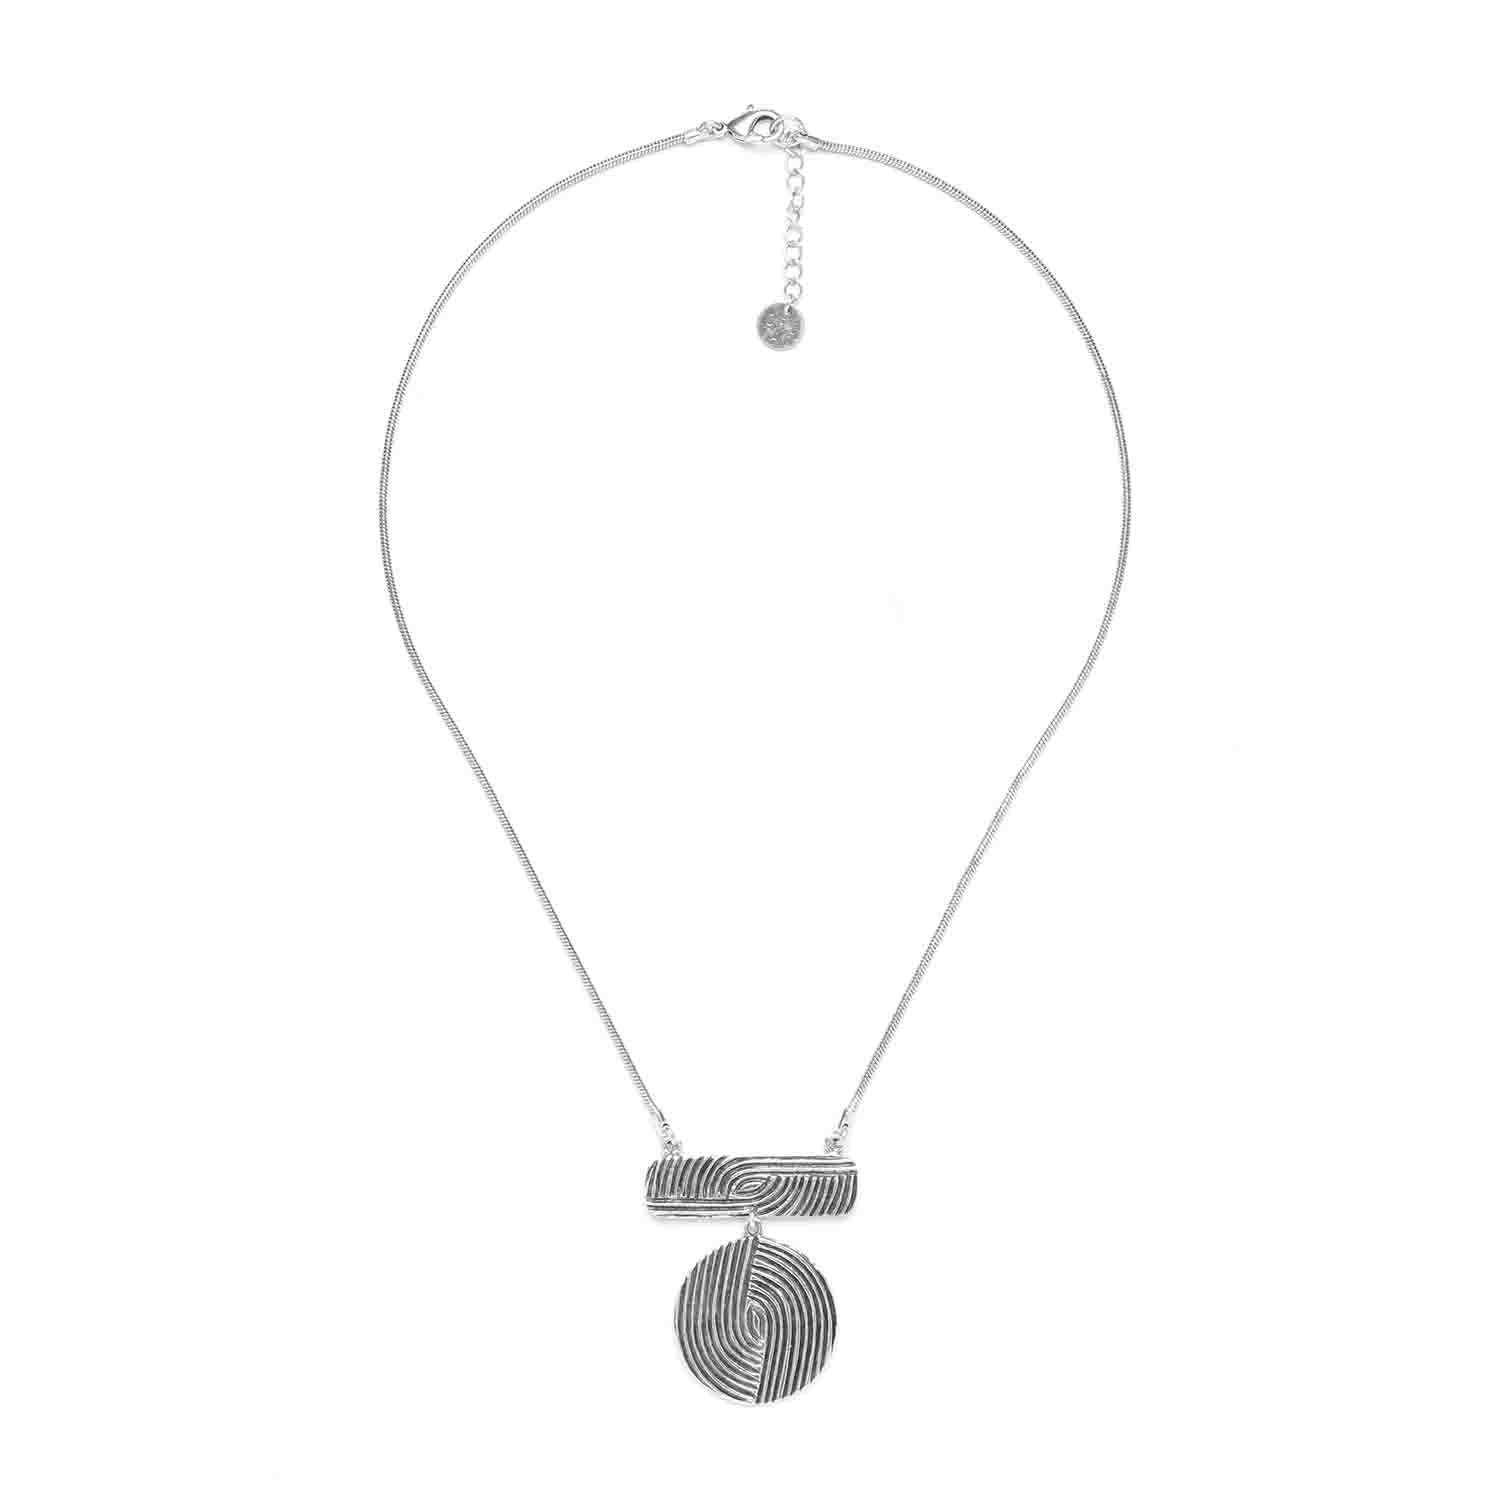 Ori Tao Pendant Necklace / Brass, Silver Patina / Short Necklace / Infinity